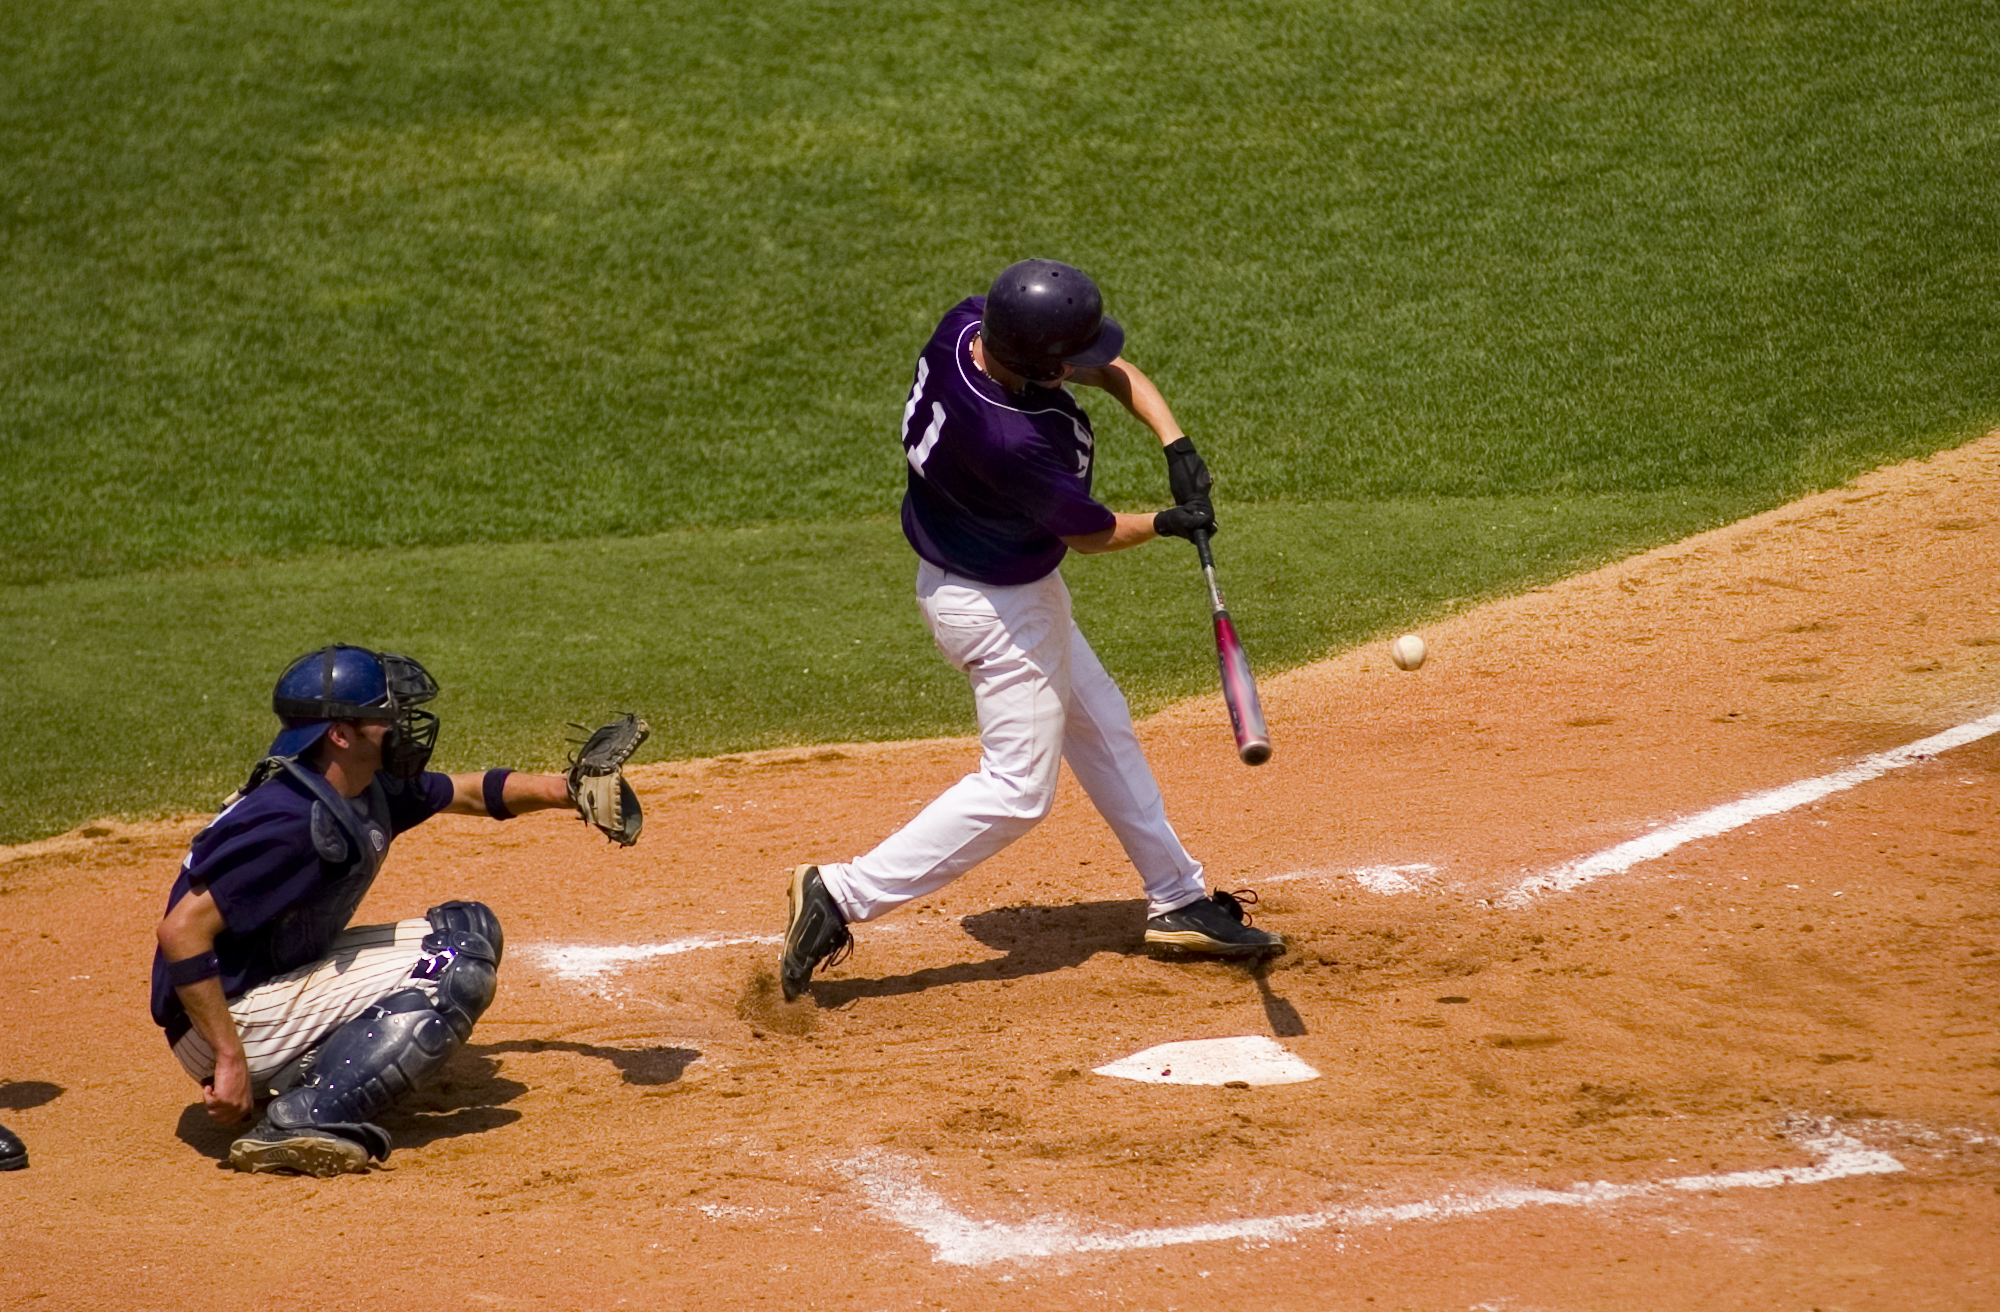 Baseball player taking a swing.